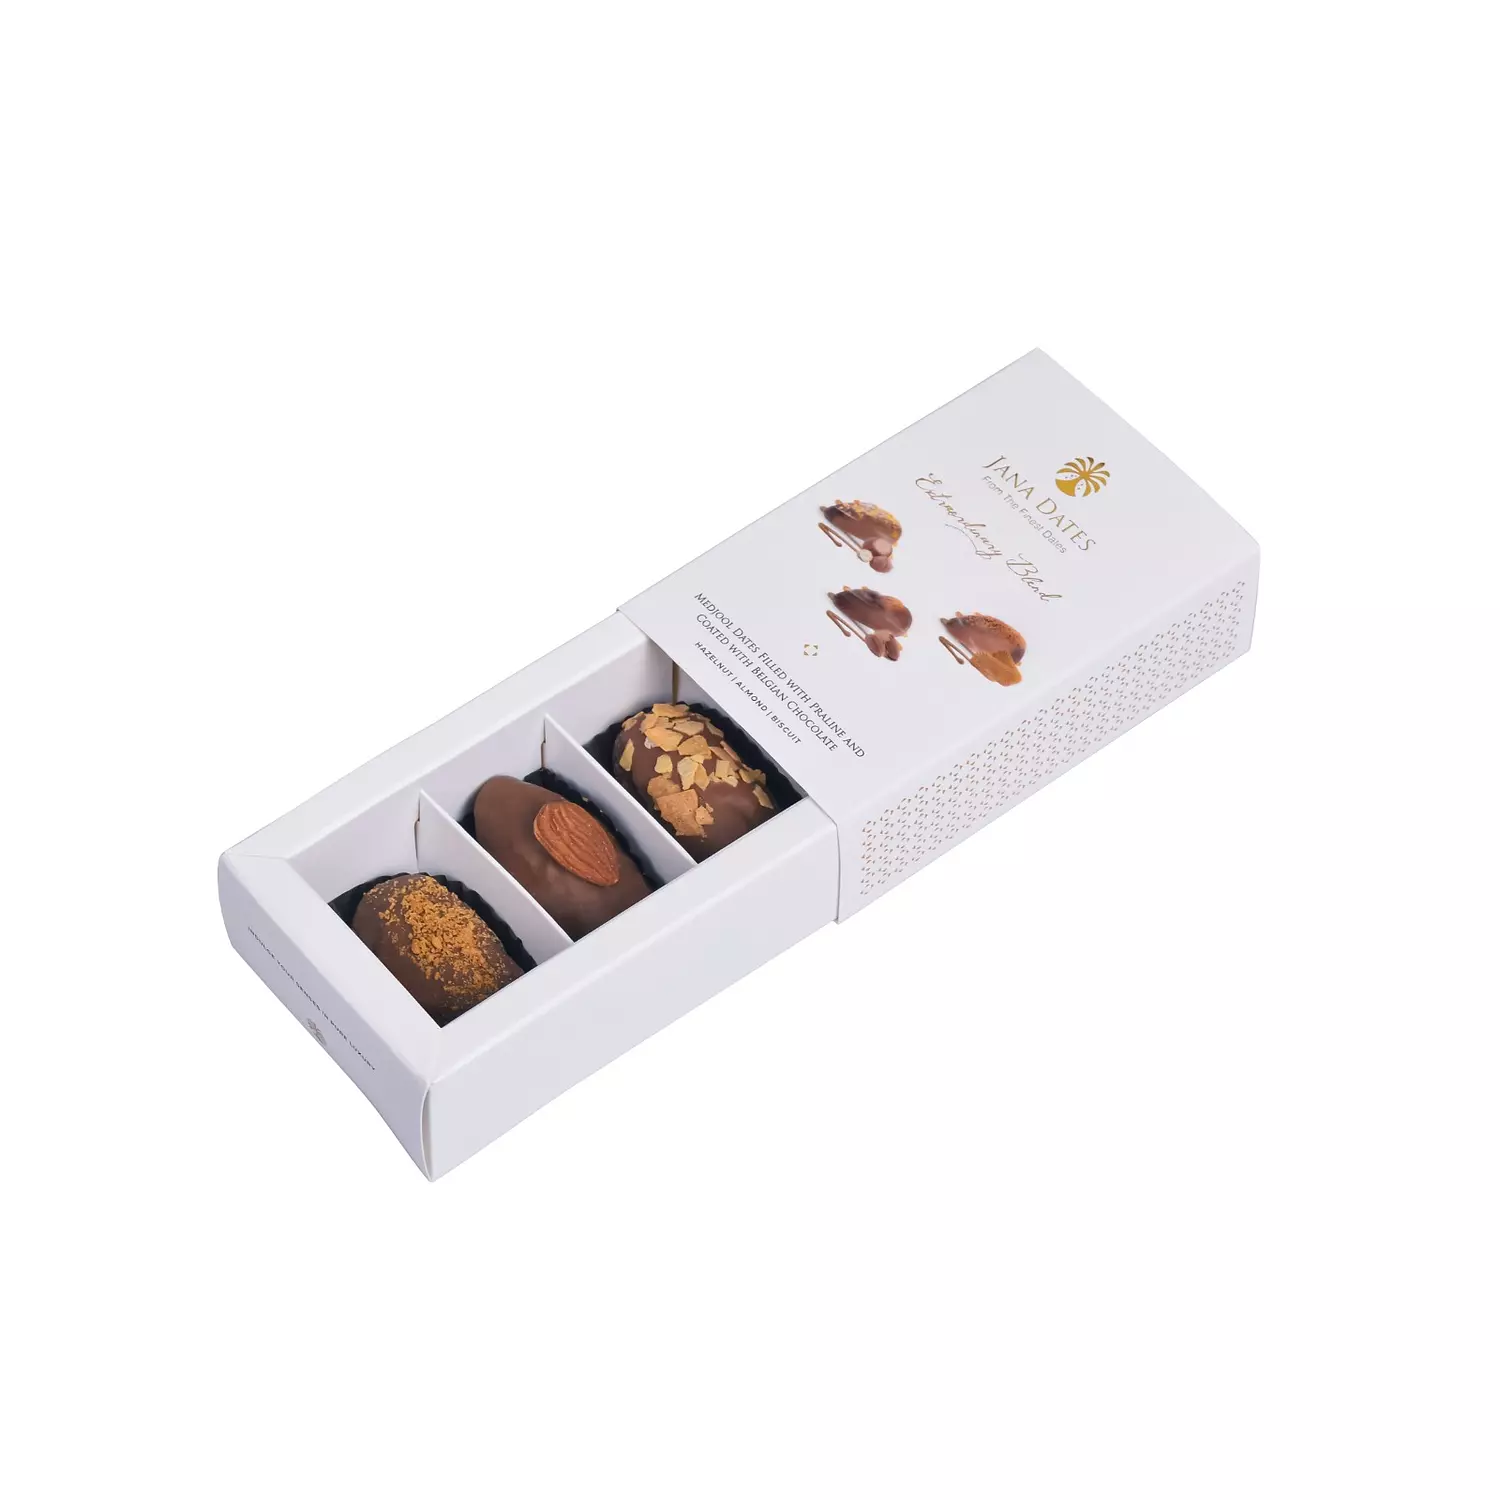 Belgium Chocolate Medjool Dates Box Small Pack hover image